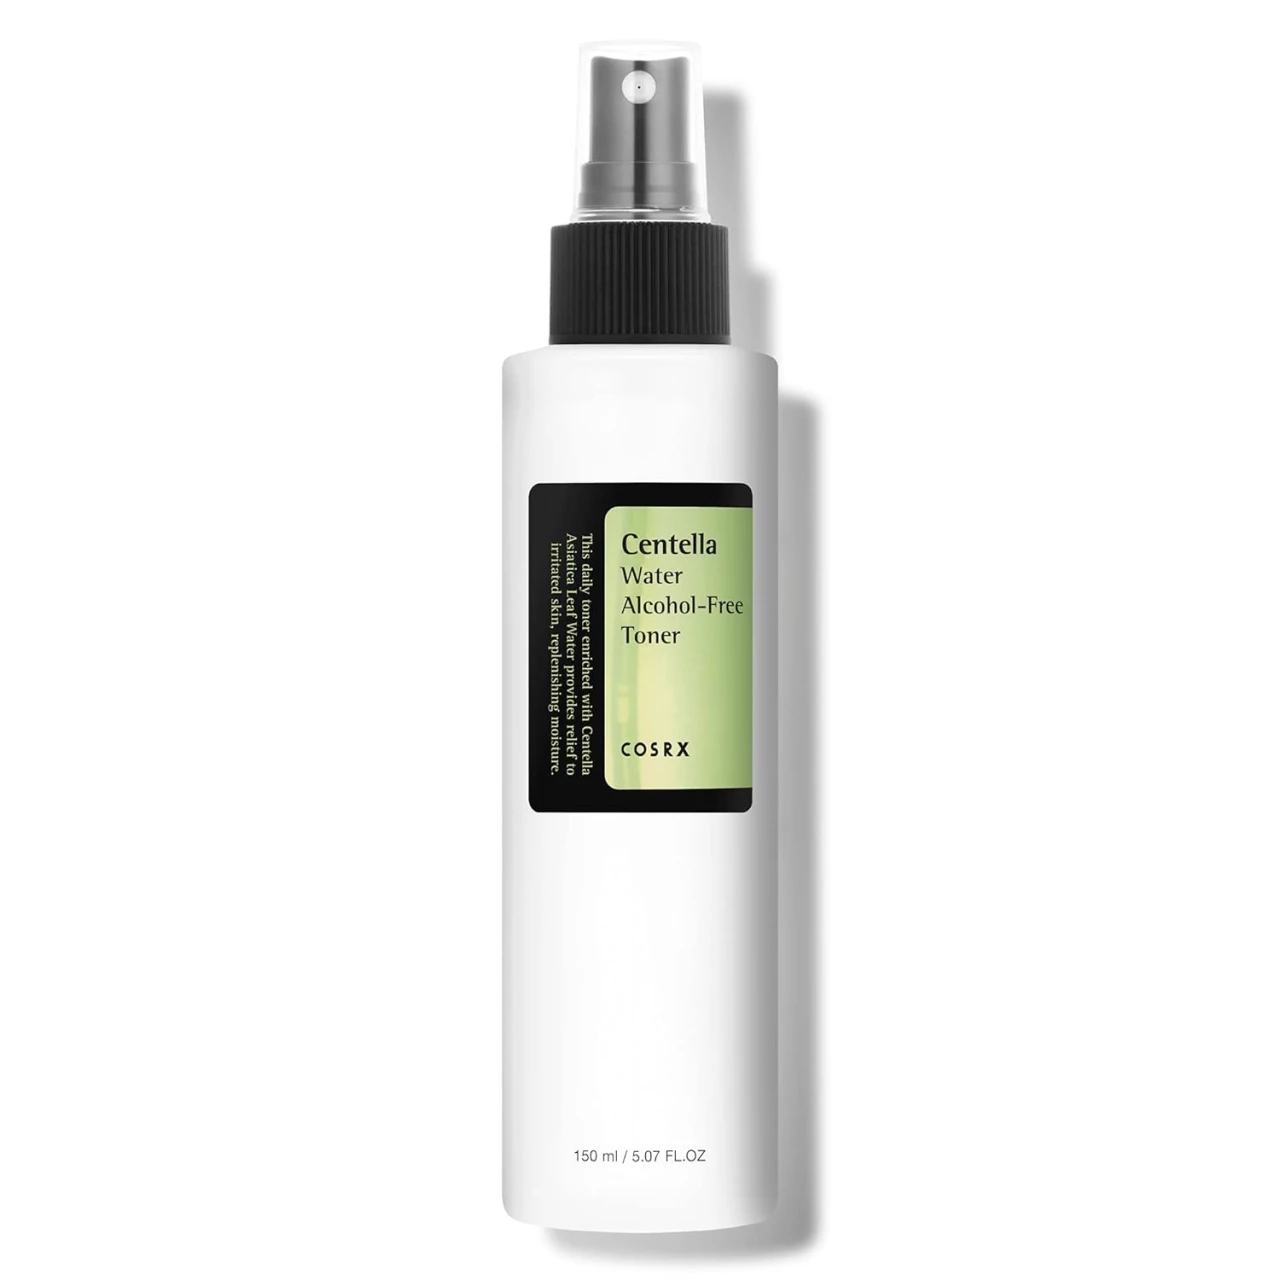 COSRX Centella Water Alcohol-Free Toner, 150ml / 5.07 fl.oz | Centella Asiatica for Soothing | Korean Skin Care